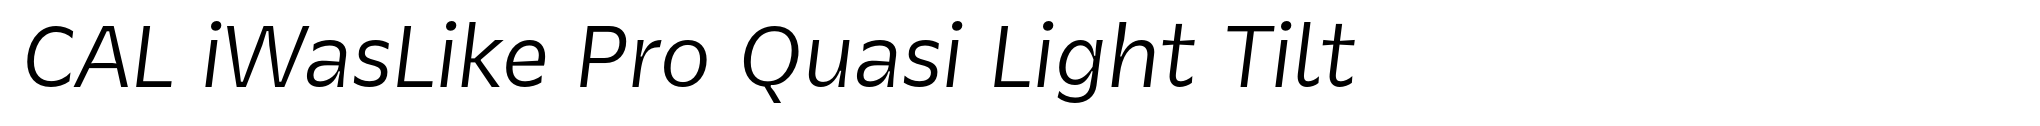 CAL iWasLike Pro Quasi Light Tilt image